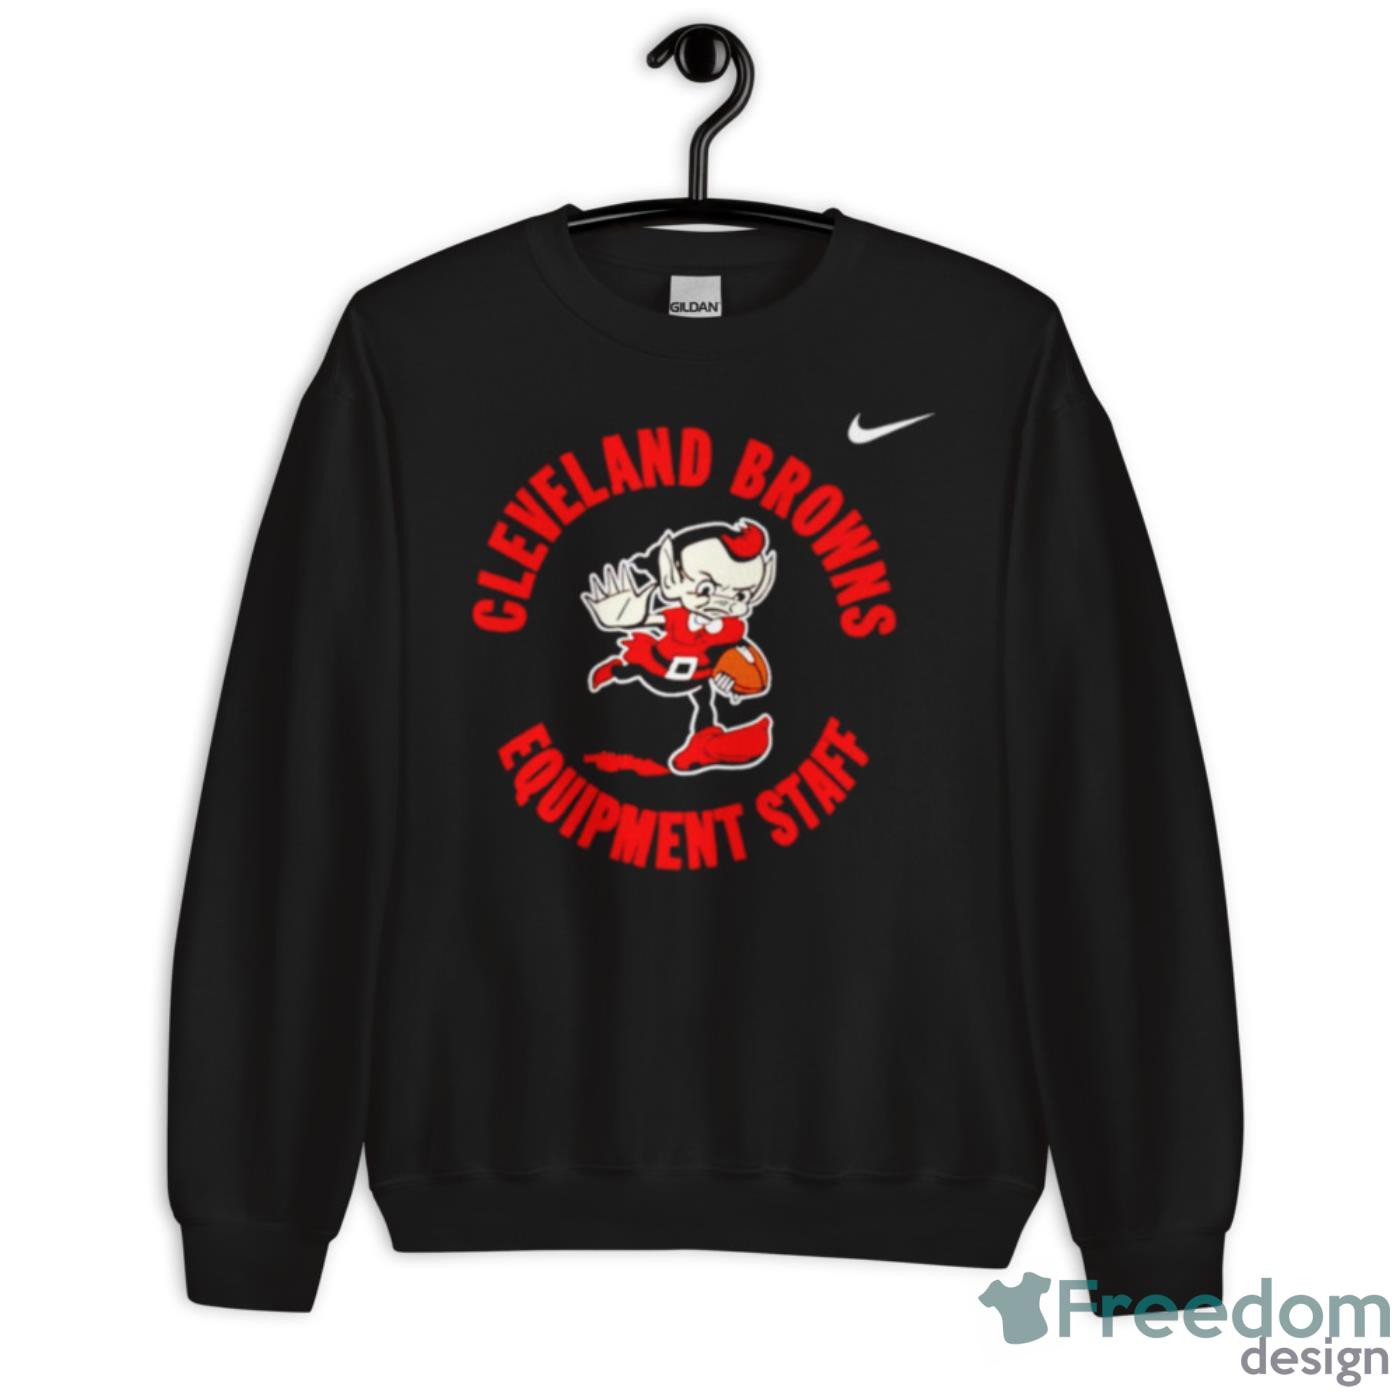 Cleveland Browns Equipment Staff Nike Shirt - Freedomdesign